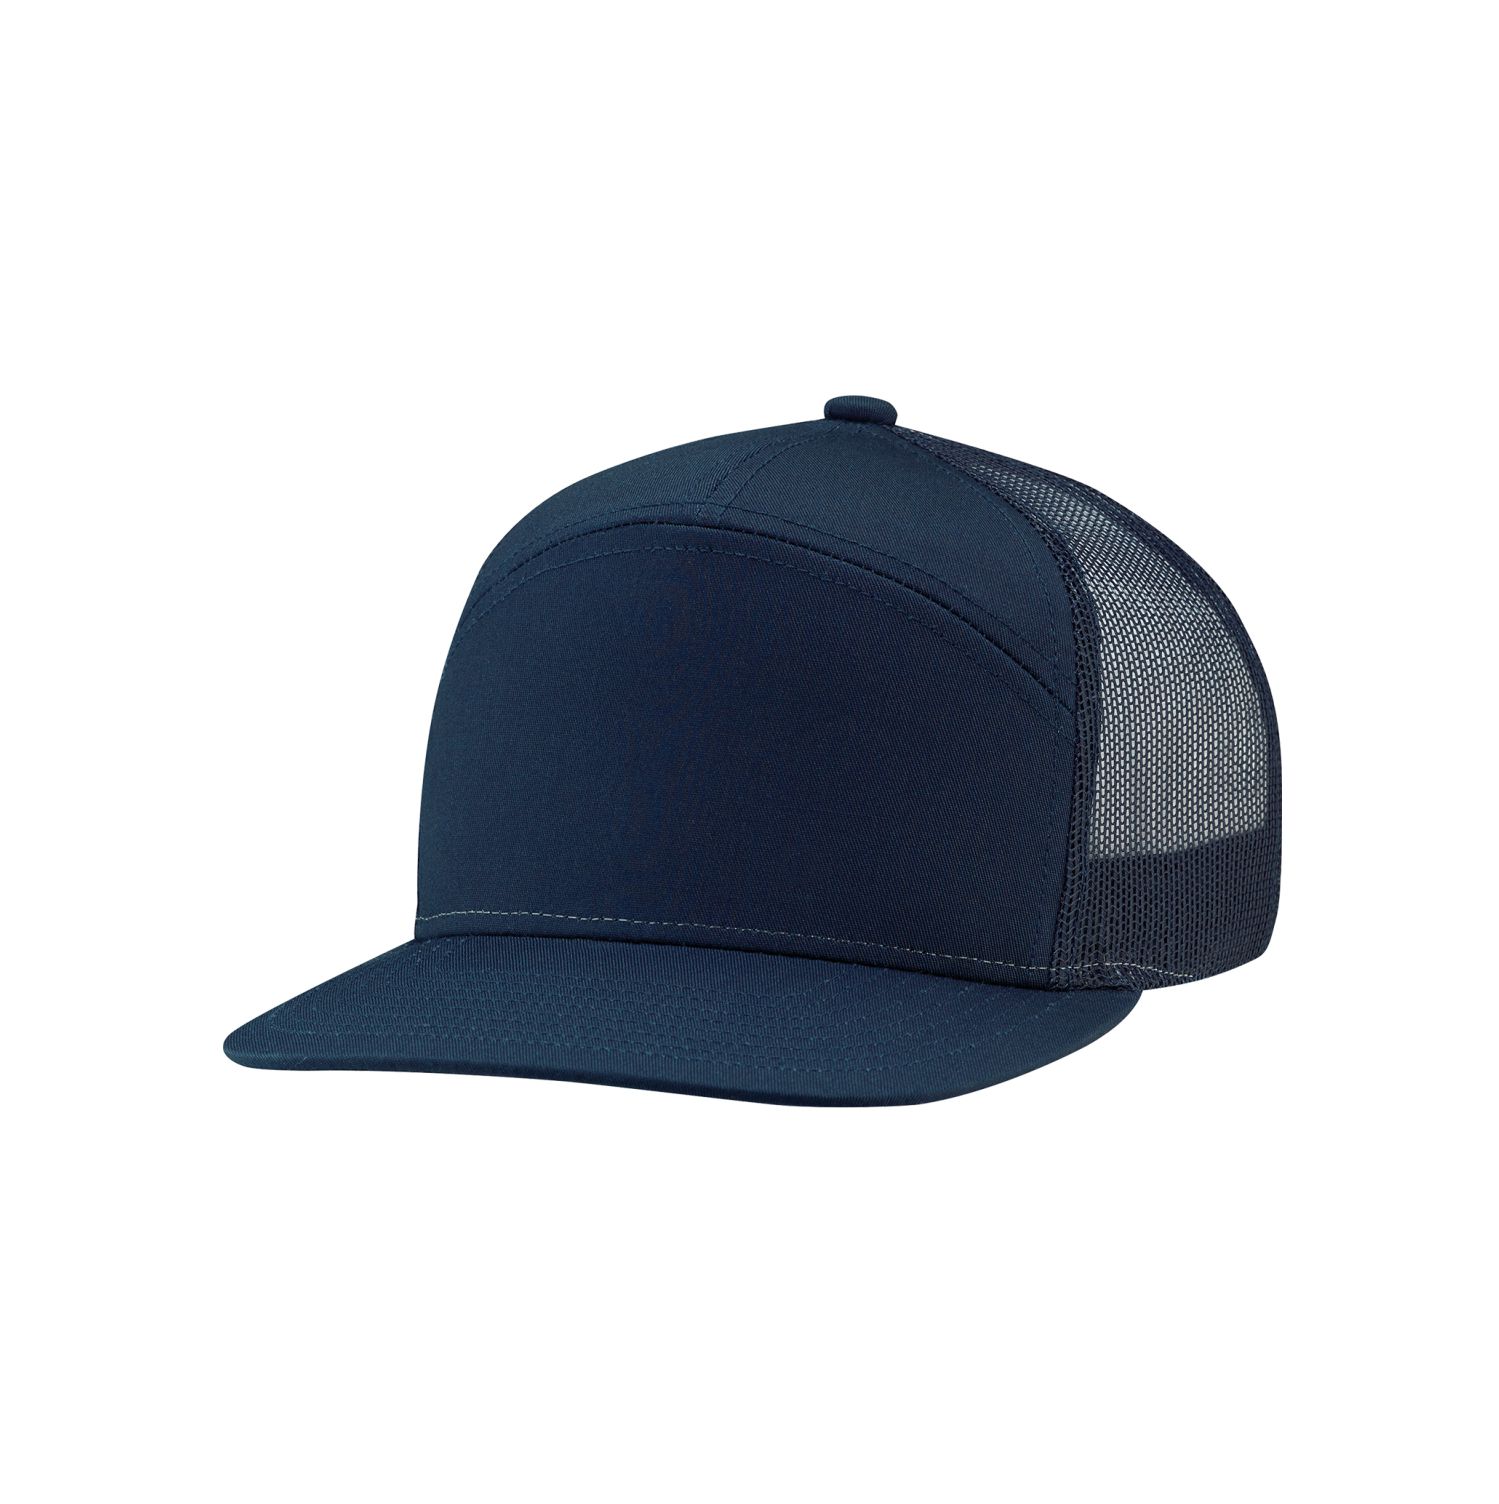 AJM Polycotton / Nylon Mesh 7 Panel Constructed Camper Style Hat (Mesh Back) #3D410M Navy